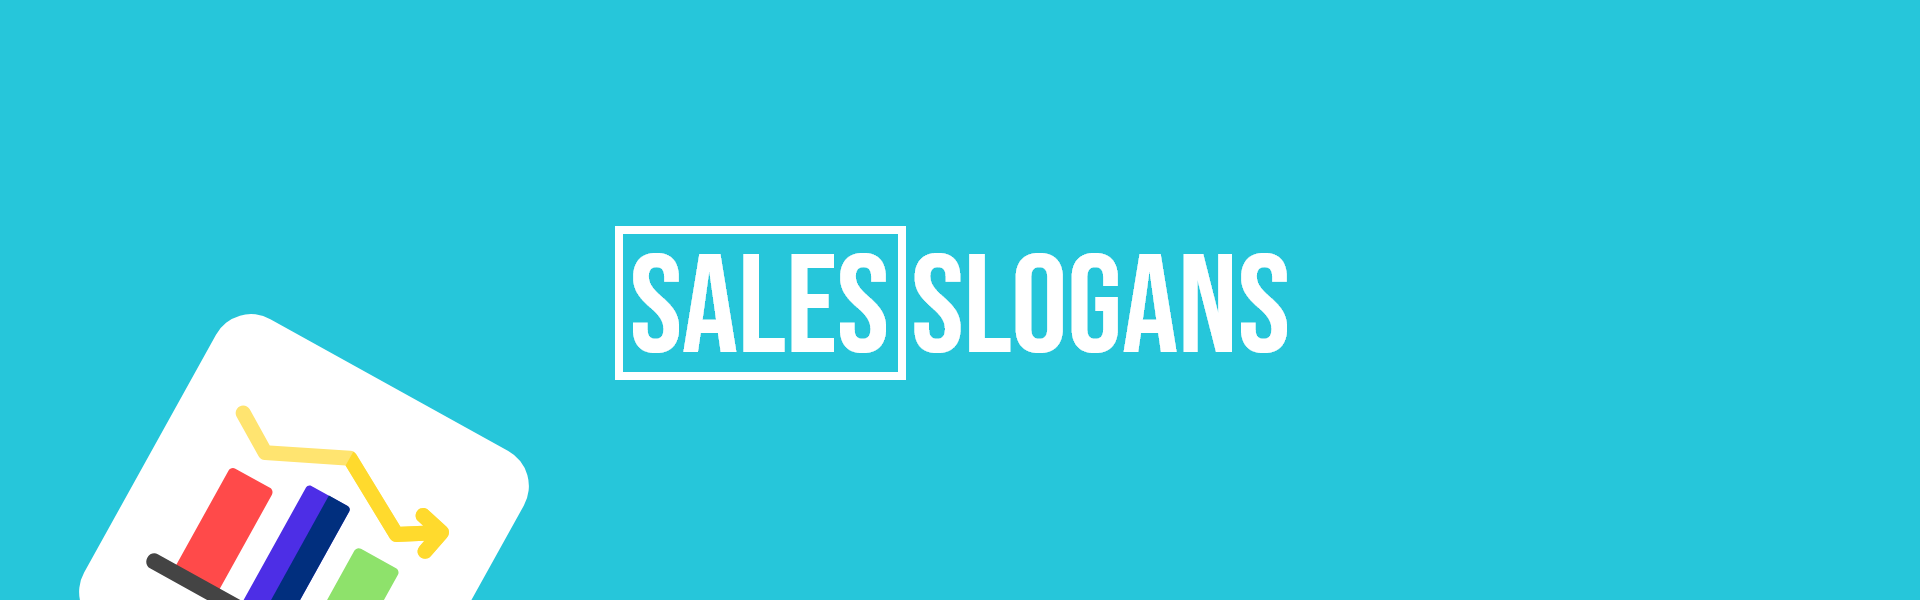 sales slogans taglines